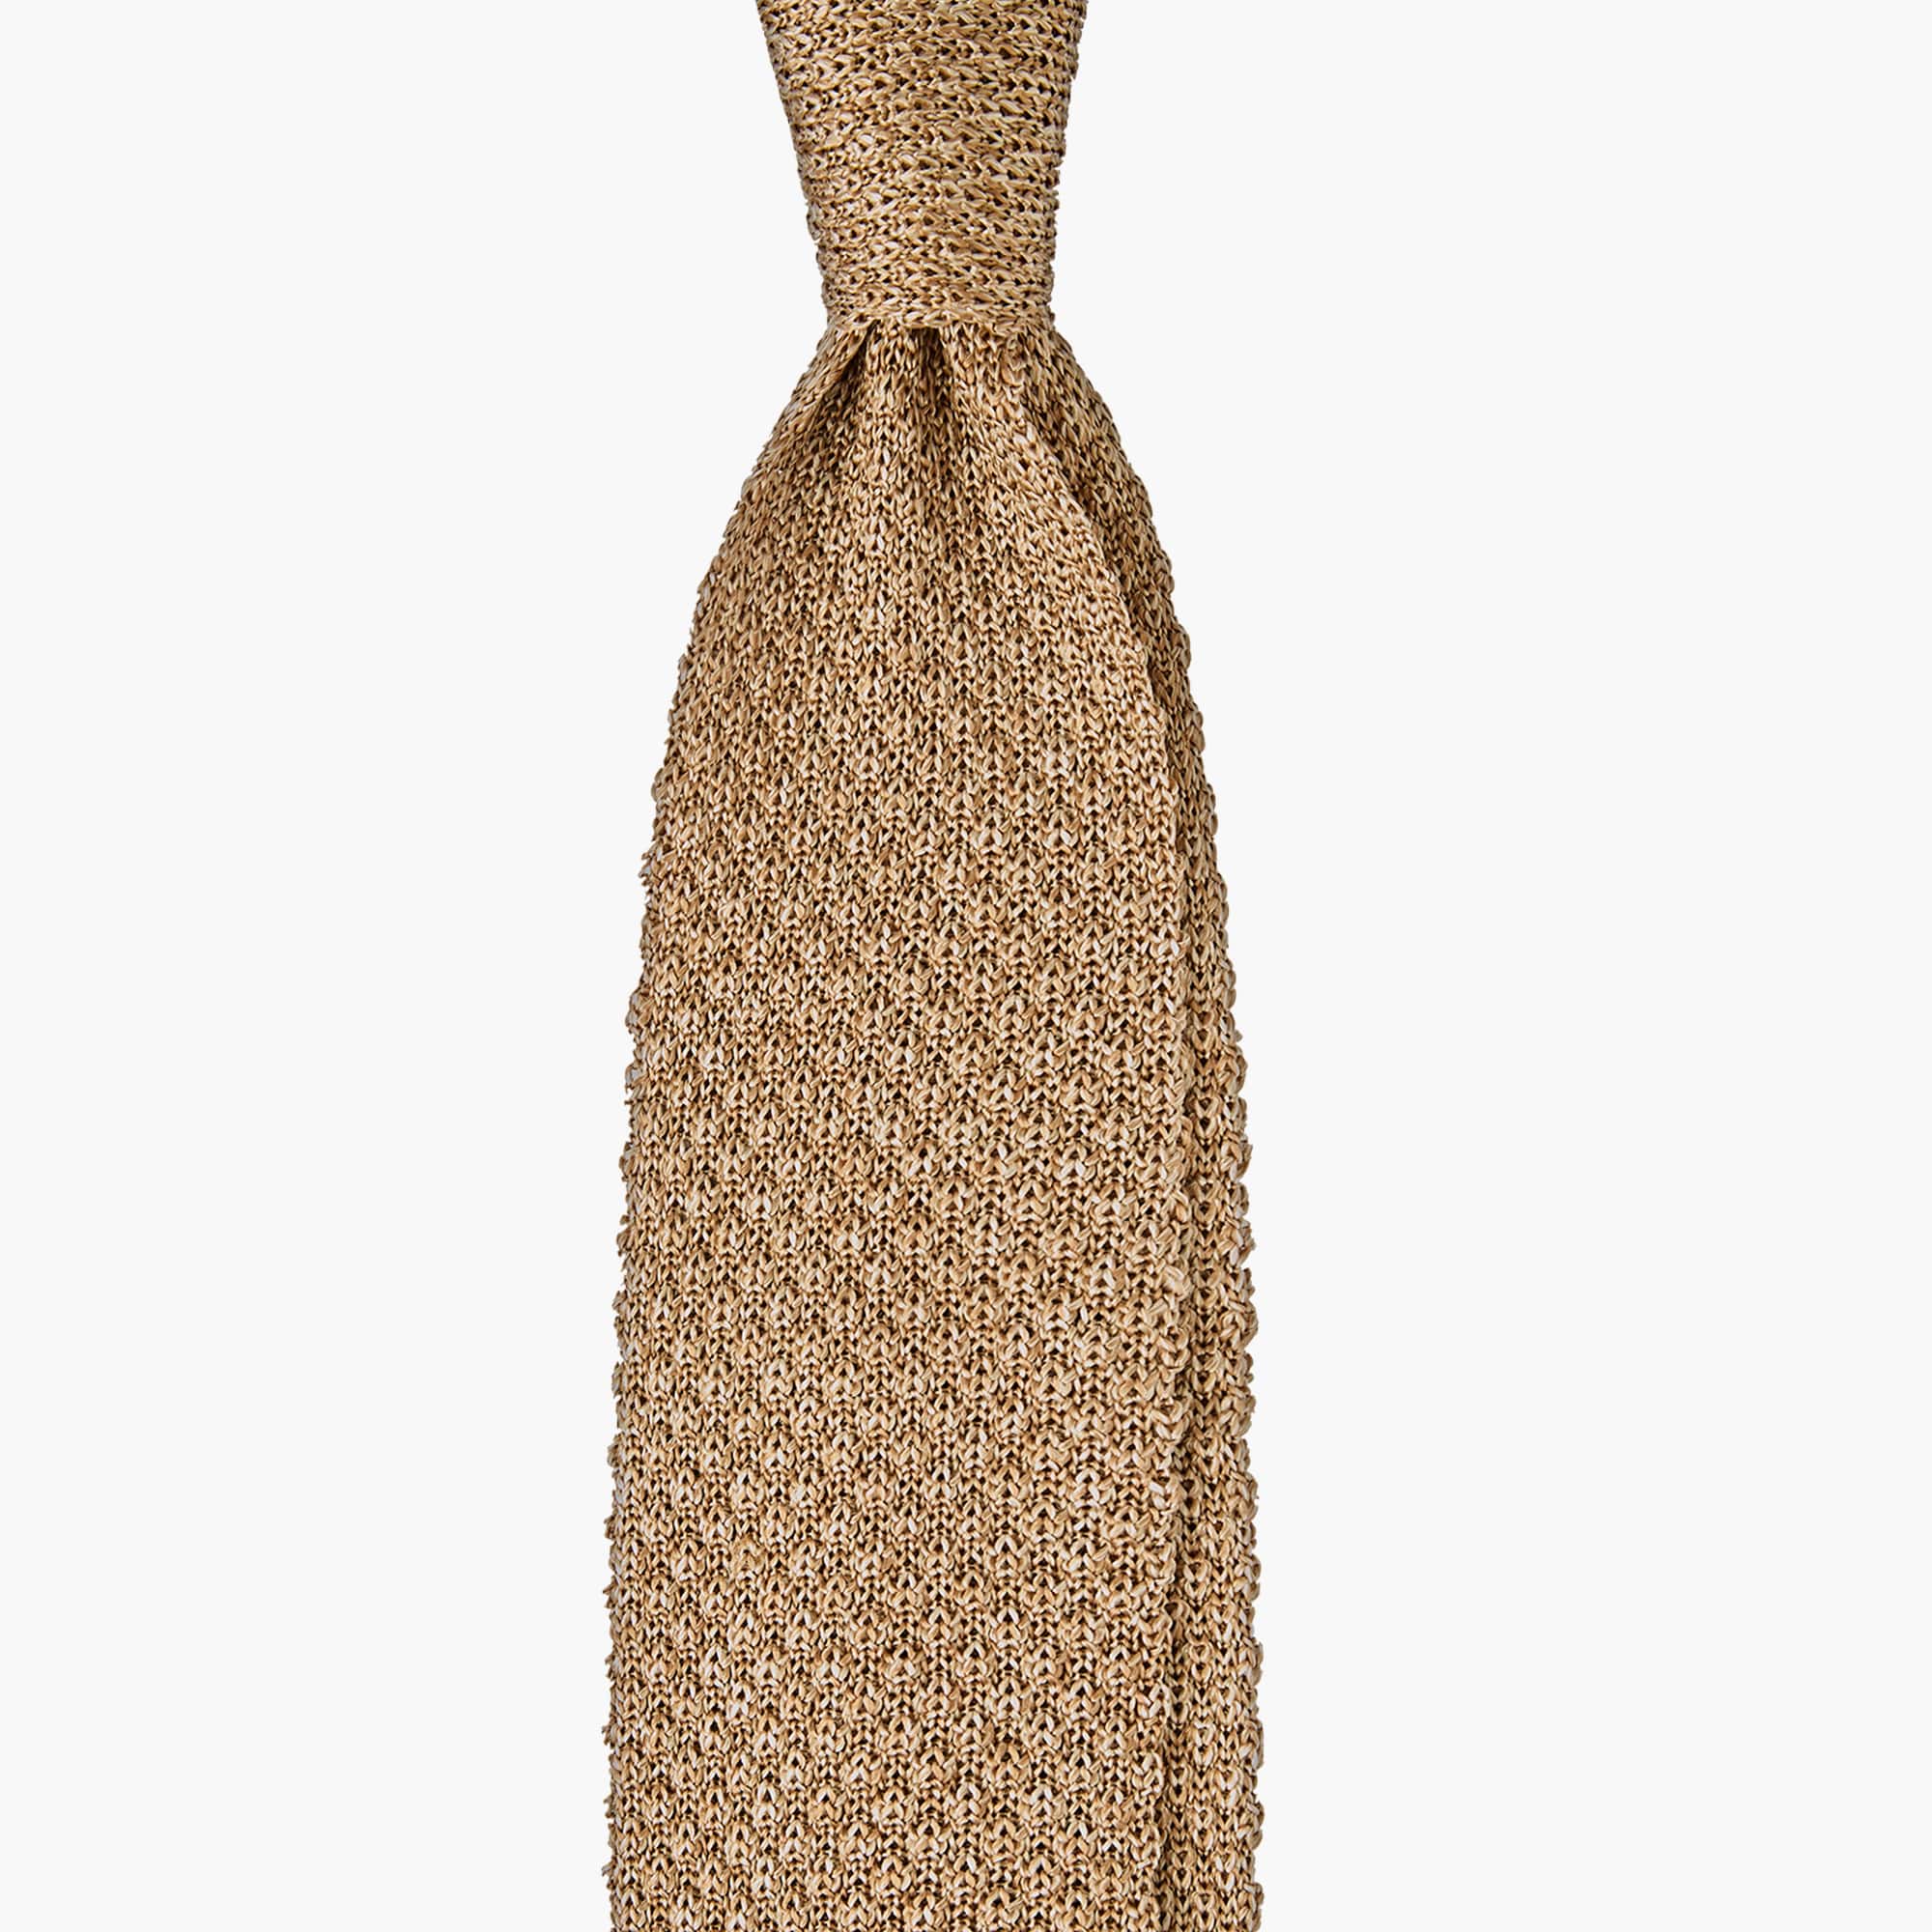 Knitted Solid Tie - Melange Beige